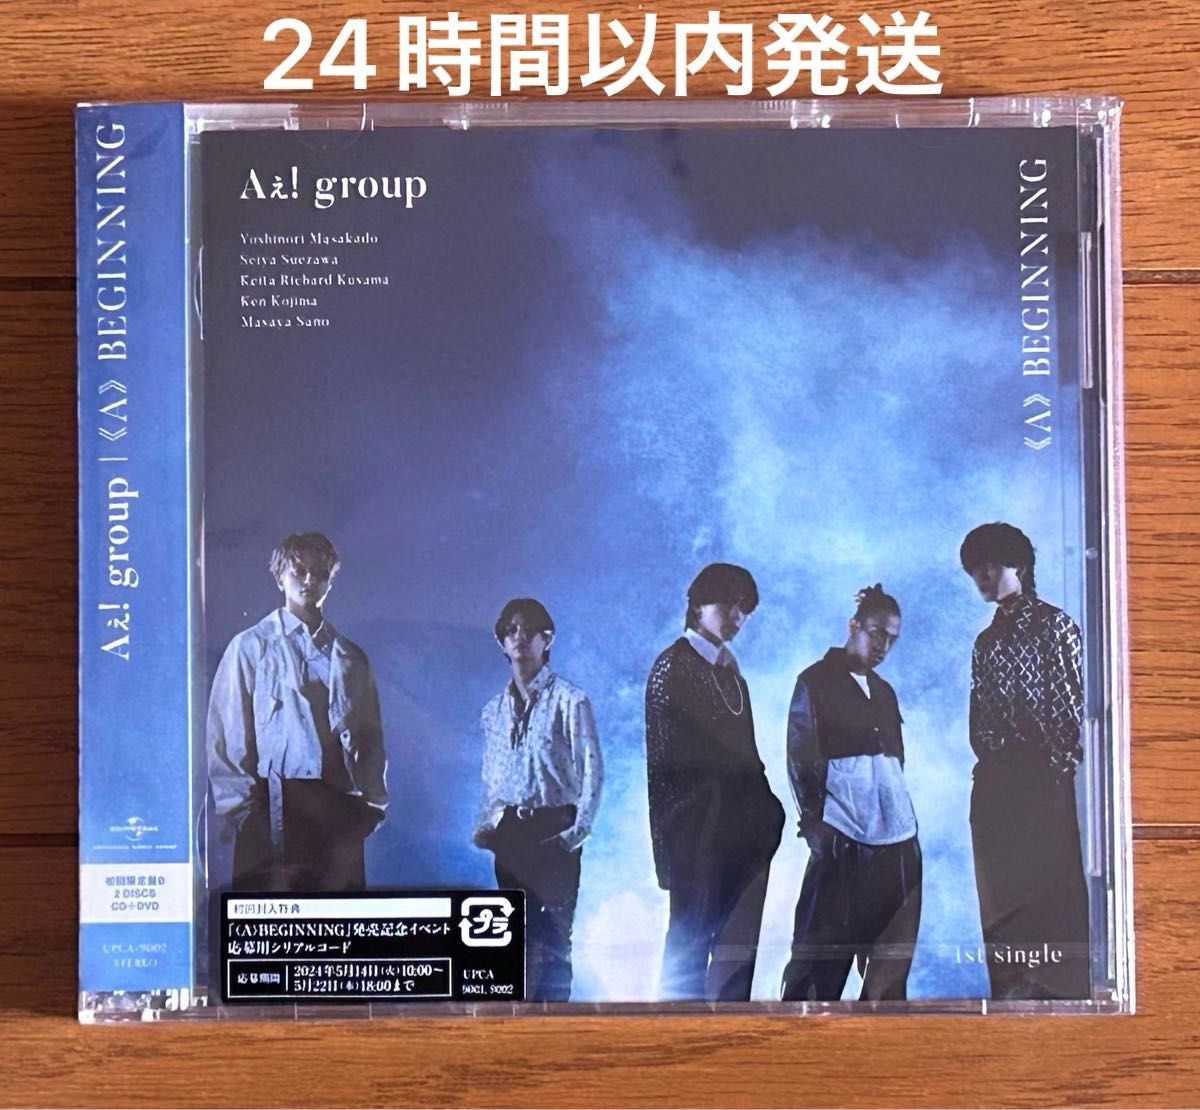 Aぇ!group ≪A≫BEGINNING 初回限定盤B CD+DVD